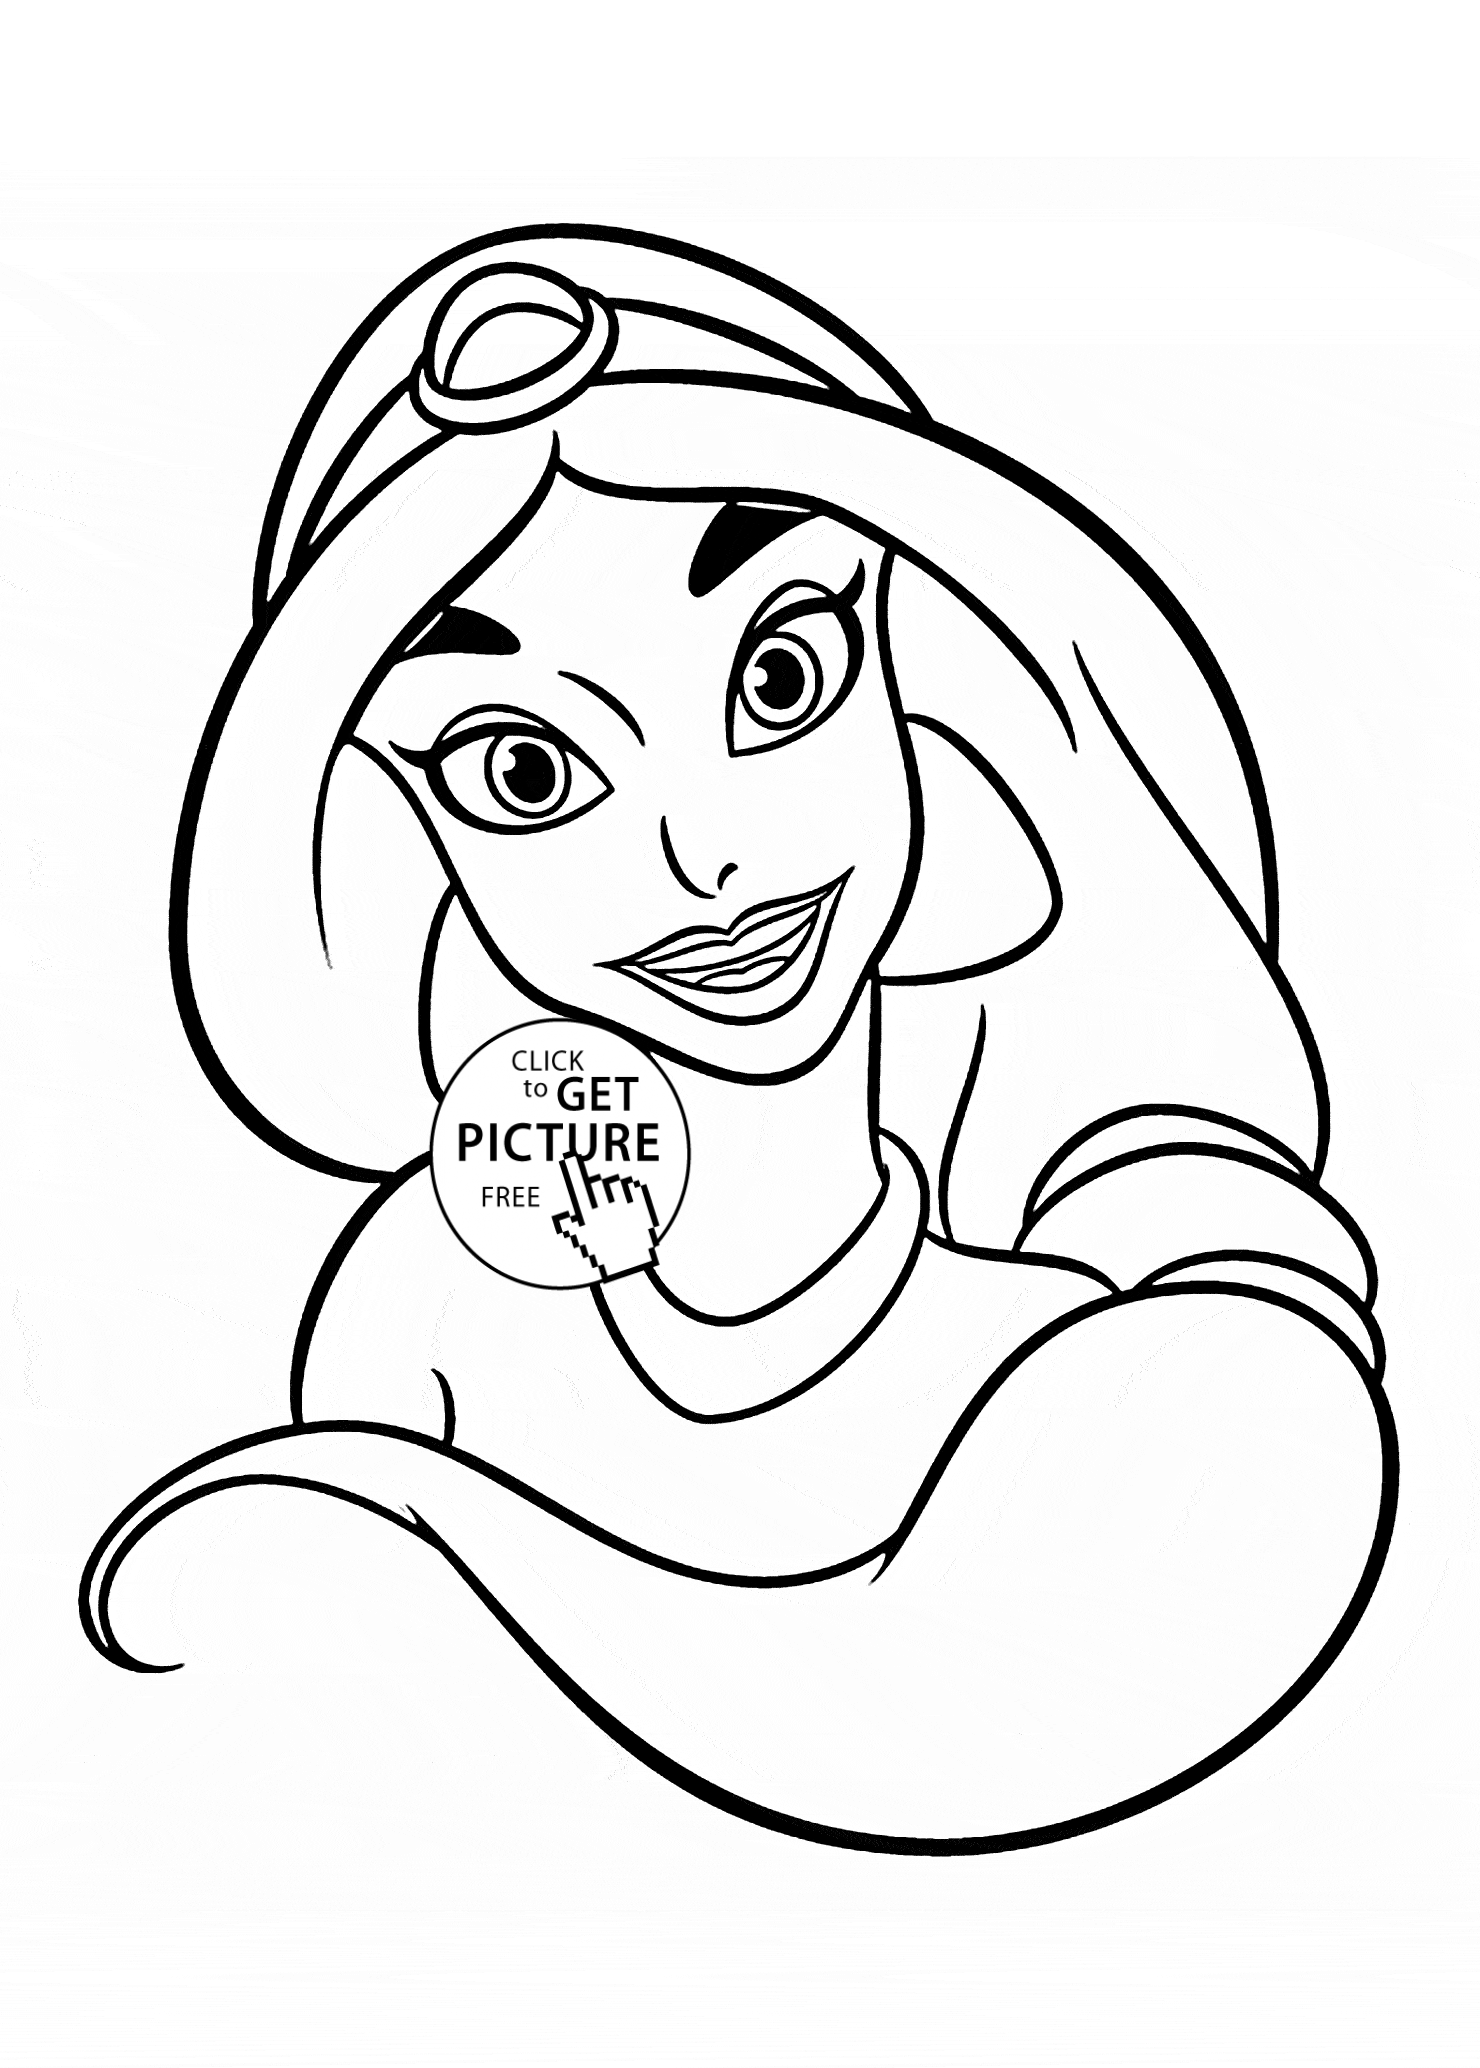 Disney princess coloring pages free printable, Disney princess ...